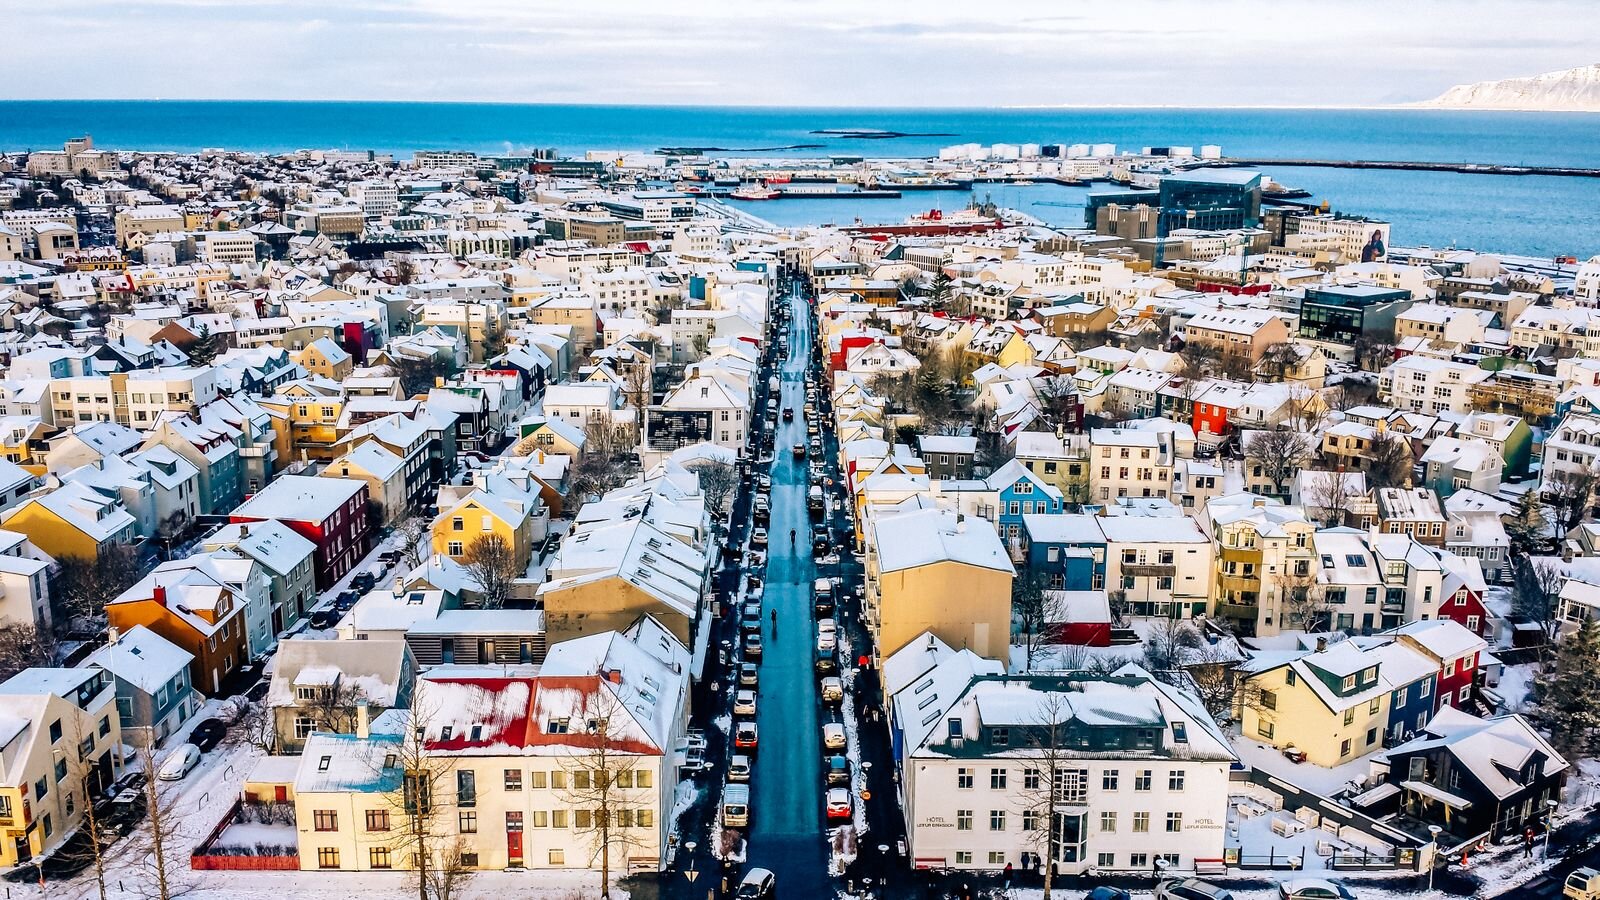 View of Reykjavik city rooftops from Hallgrimskirkja